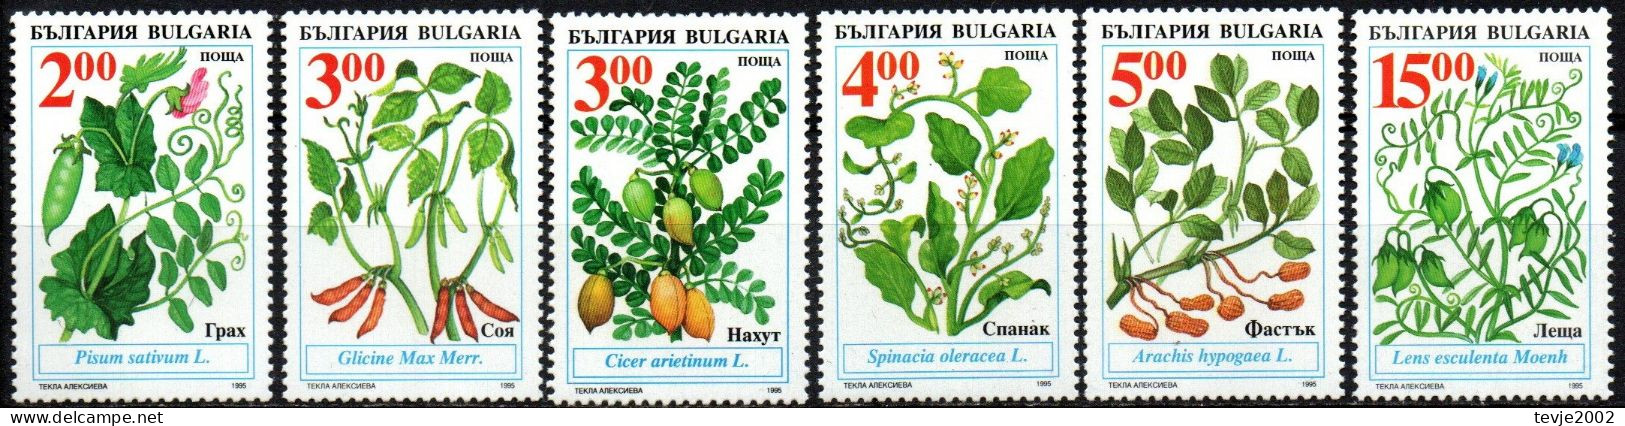 Bulgarien 1995 - Mi.Nr. 4168 - 4173 - Postfrisch MNH - Pflanzen Plants Gemüse Crops - Légumes